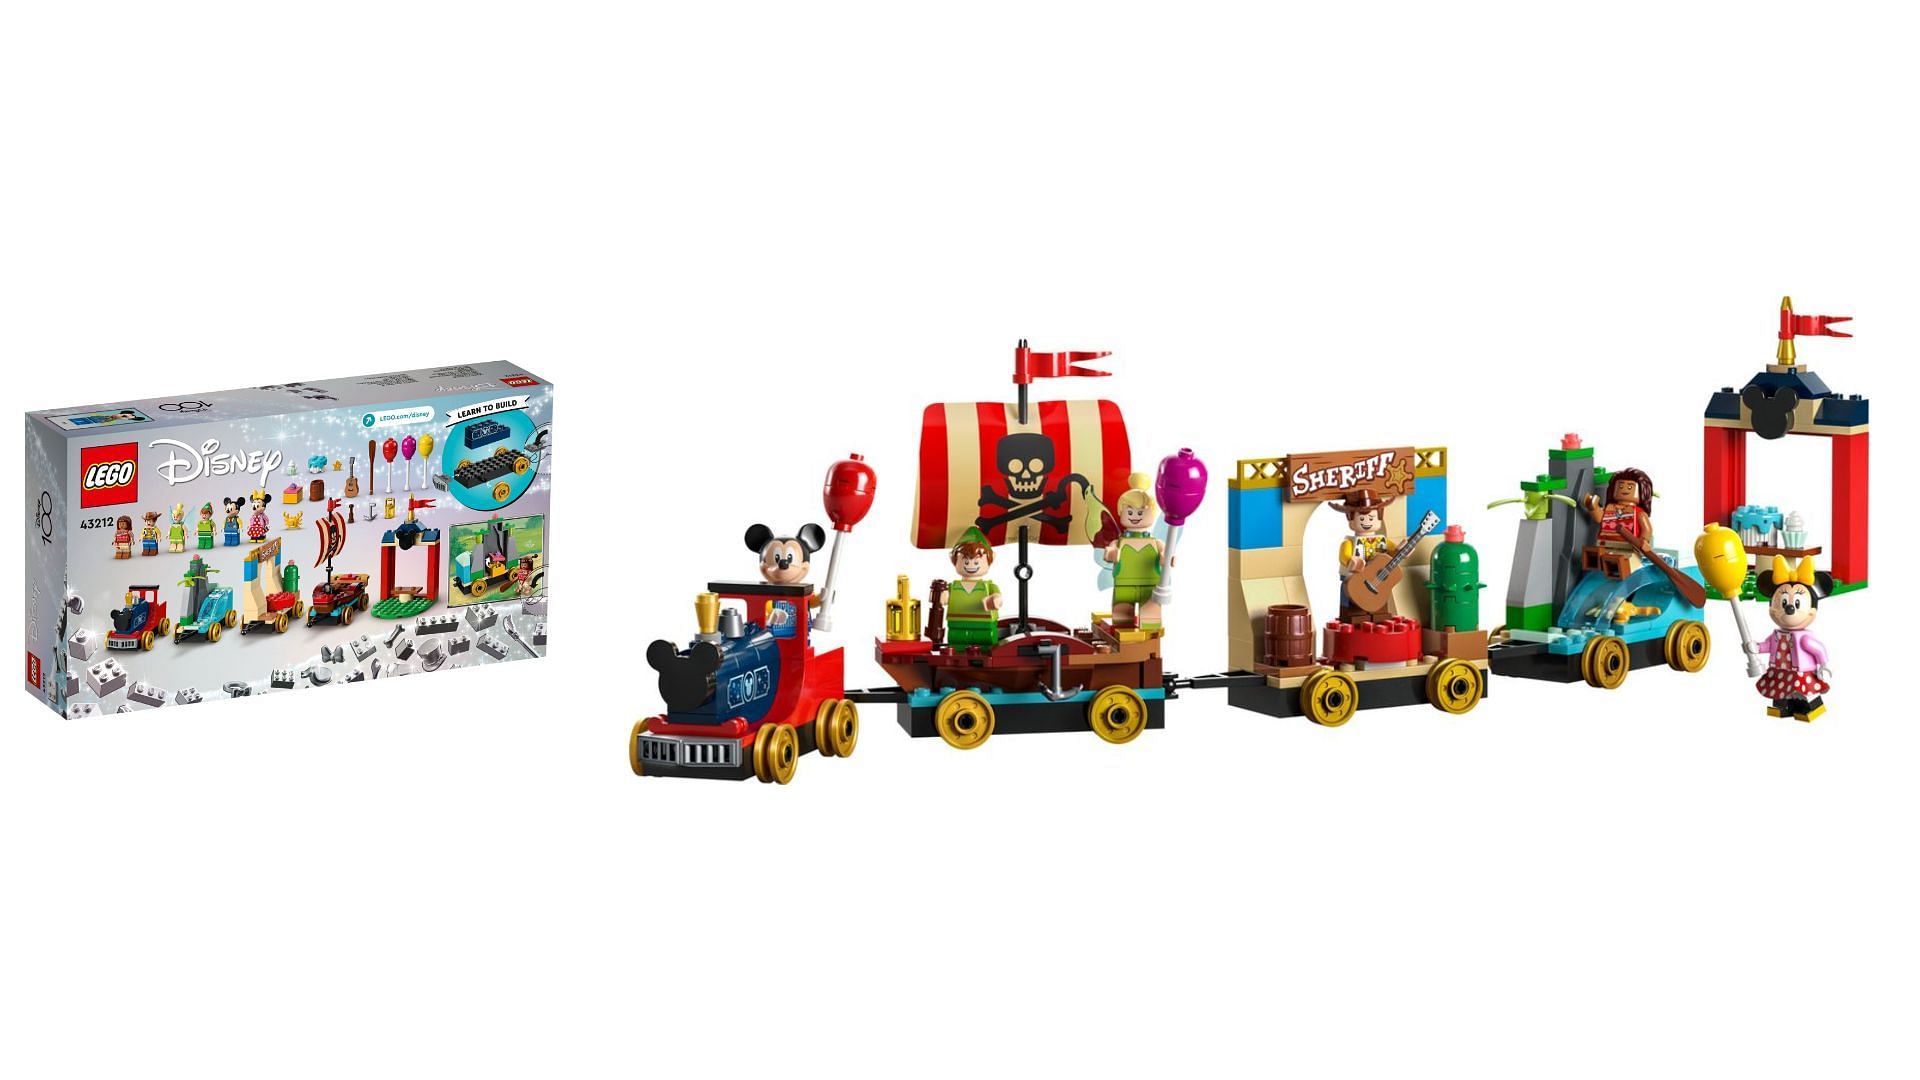 Leaked images of the Disney Birthday/Celebration Train set to launch on April 1 (Image via Lego/leaks)